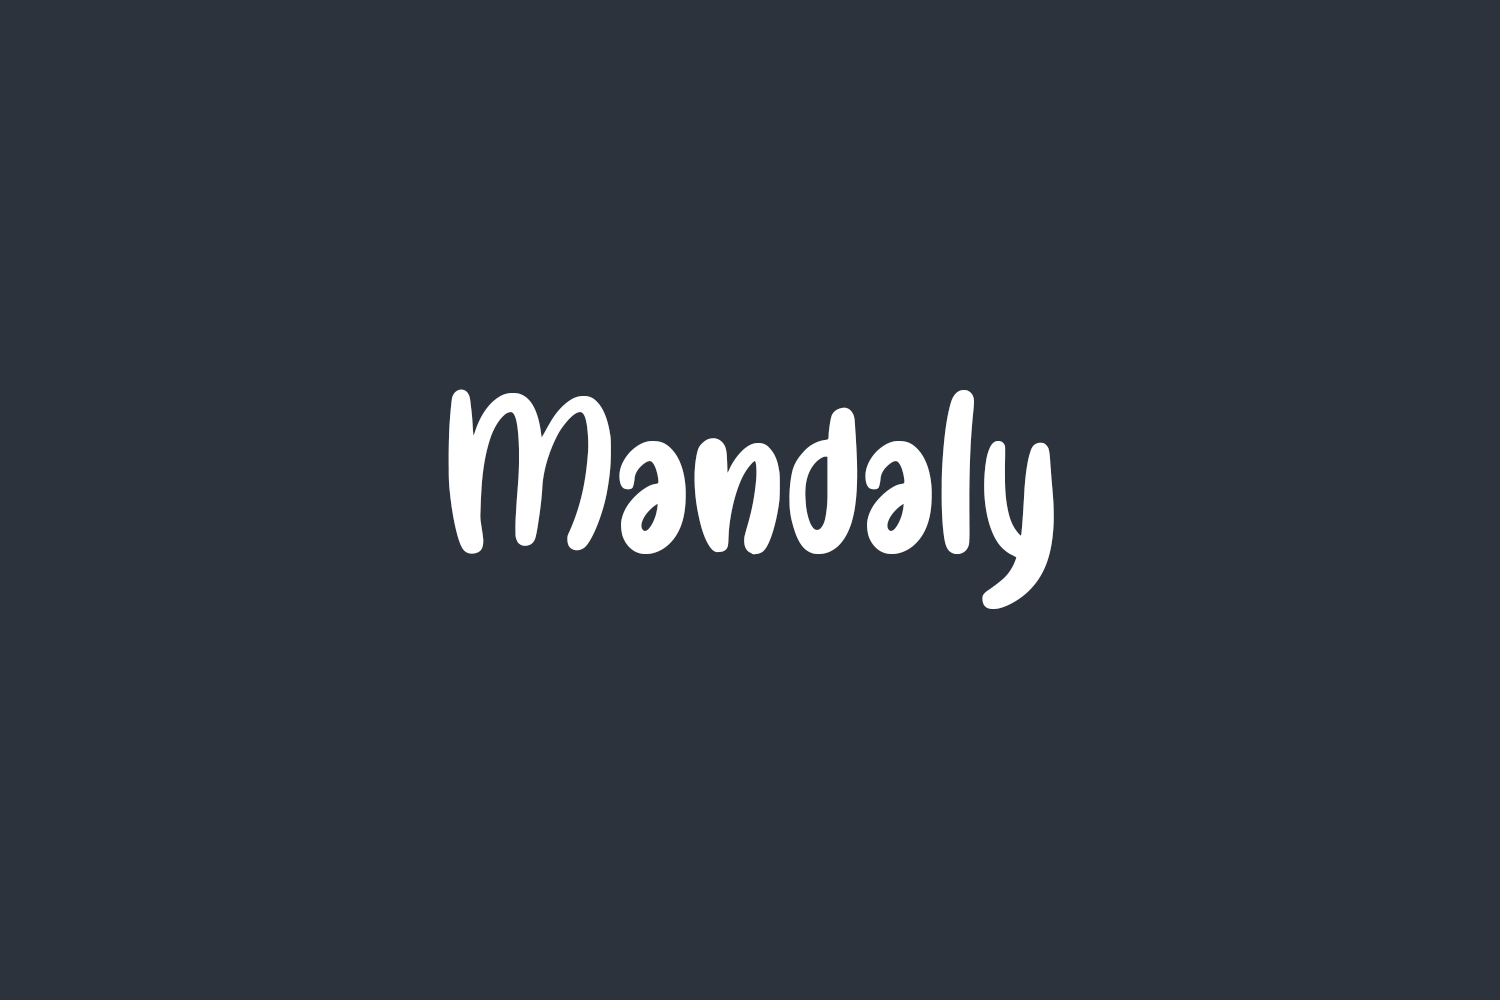 Mandaly Free Font